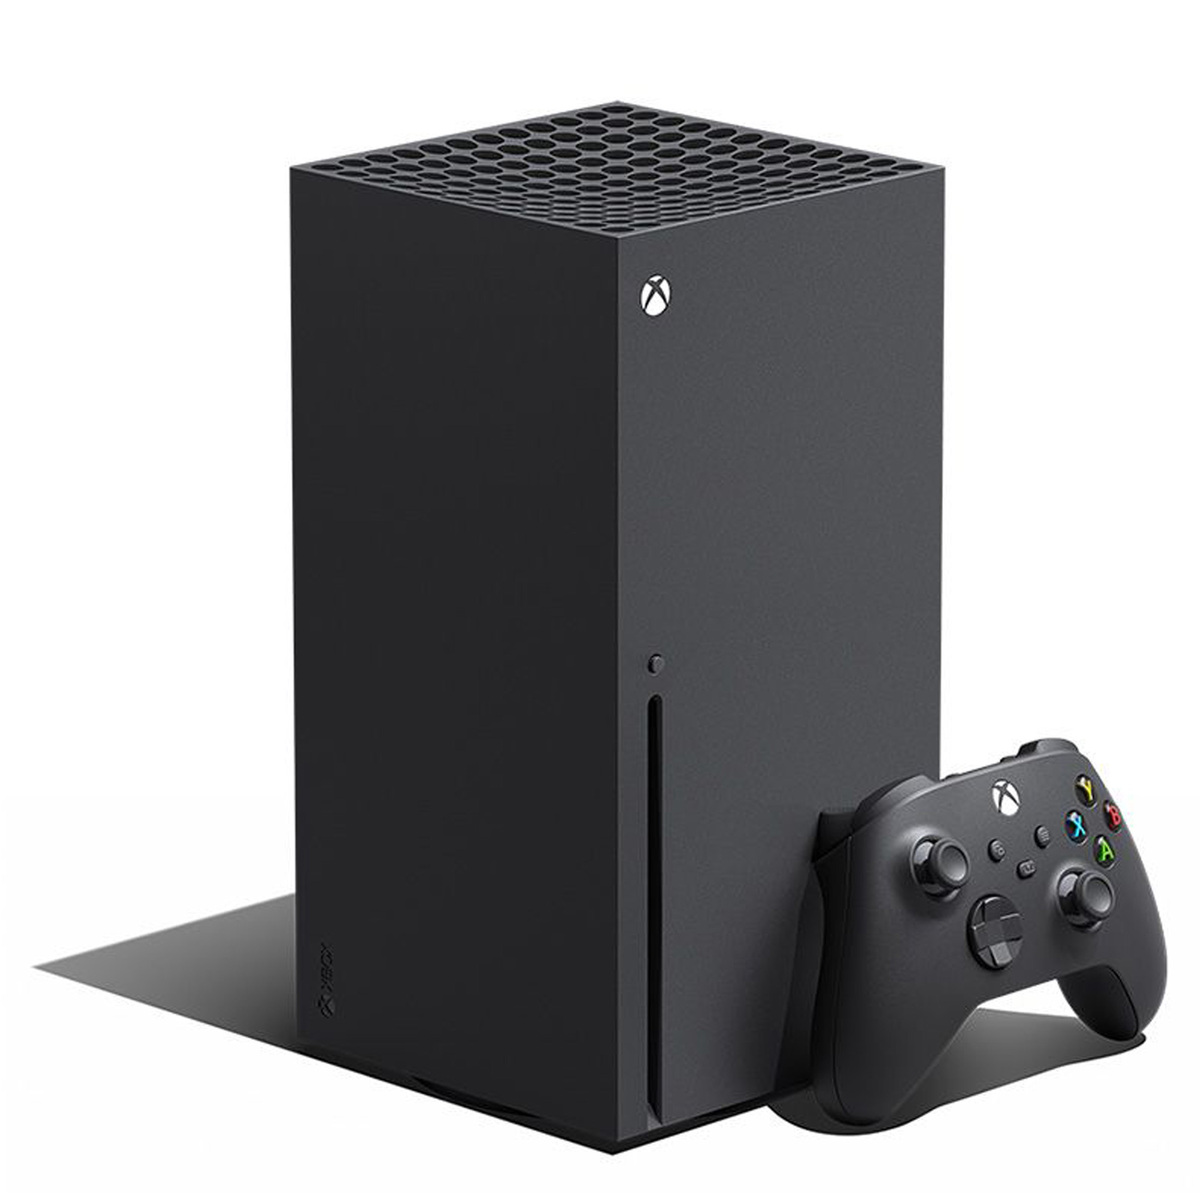 Xbox Series X Console 1TB + Forza Horizon 5 + Elite Controller + Microsoft 365 Personal